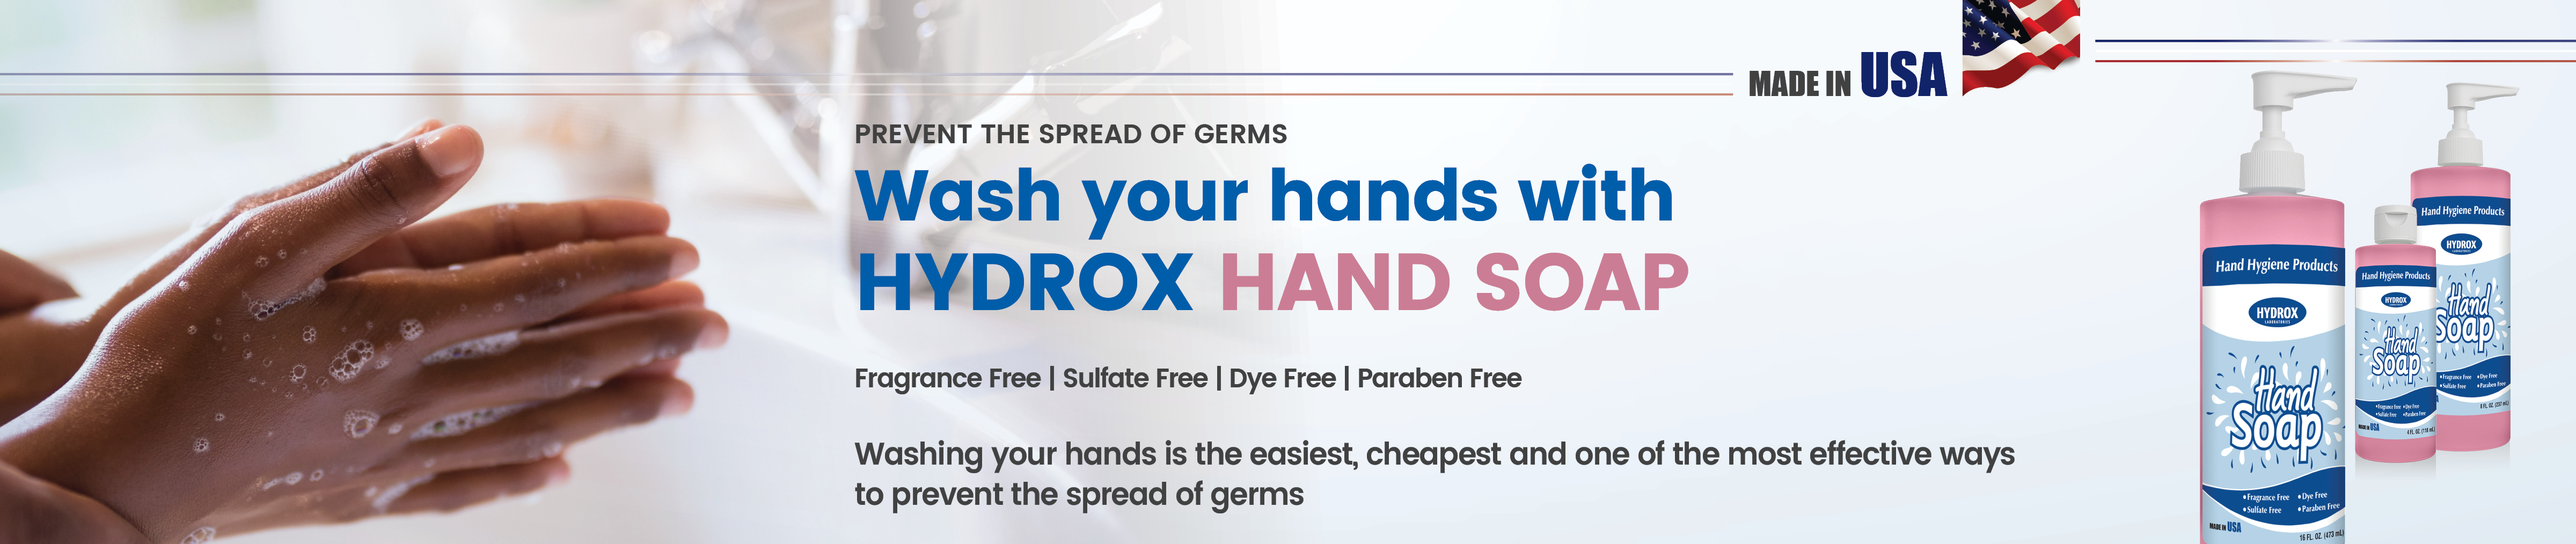 Hydrox Hand Soap